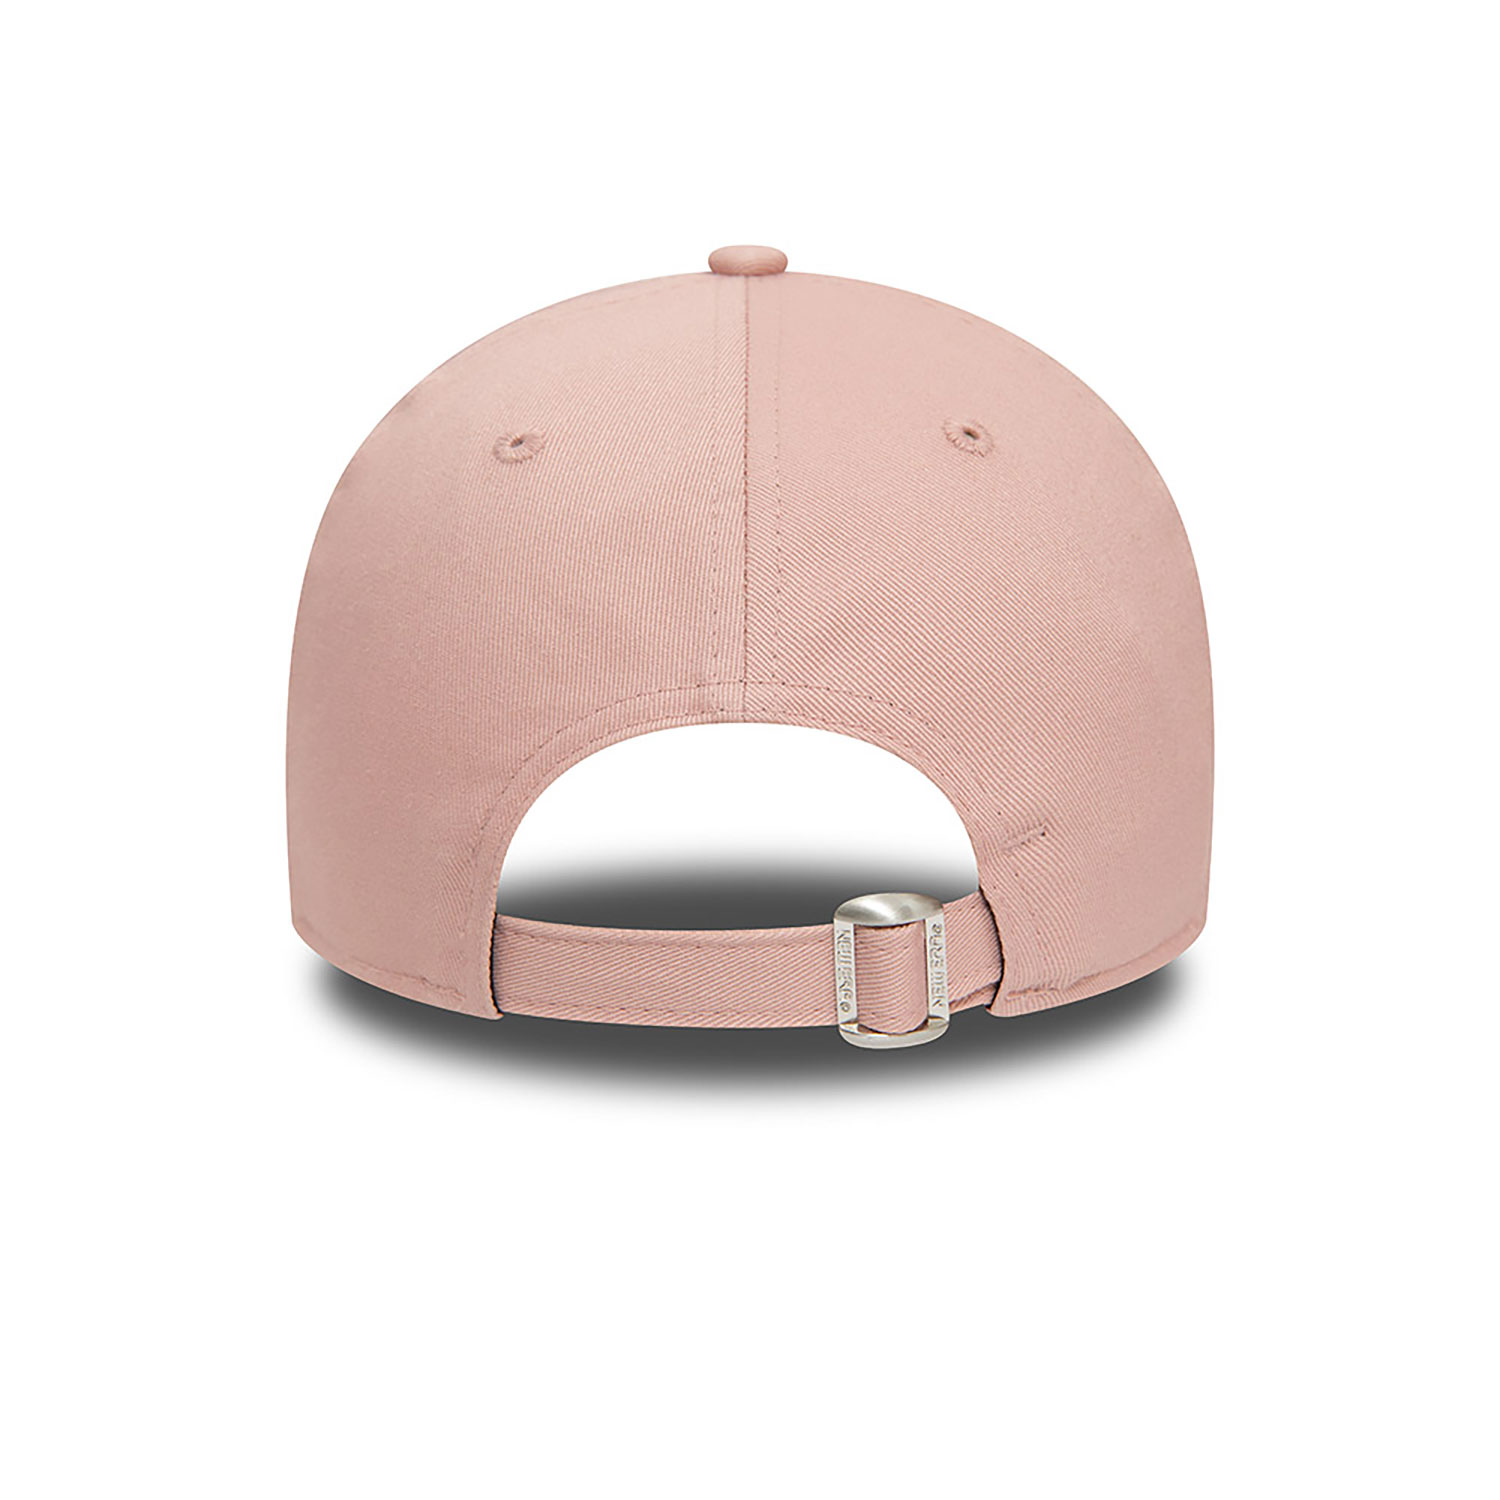 LA Dodgers MLB Icy Rhinestone Pastel Pink 9FORTY Adjustable Cap